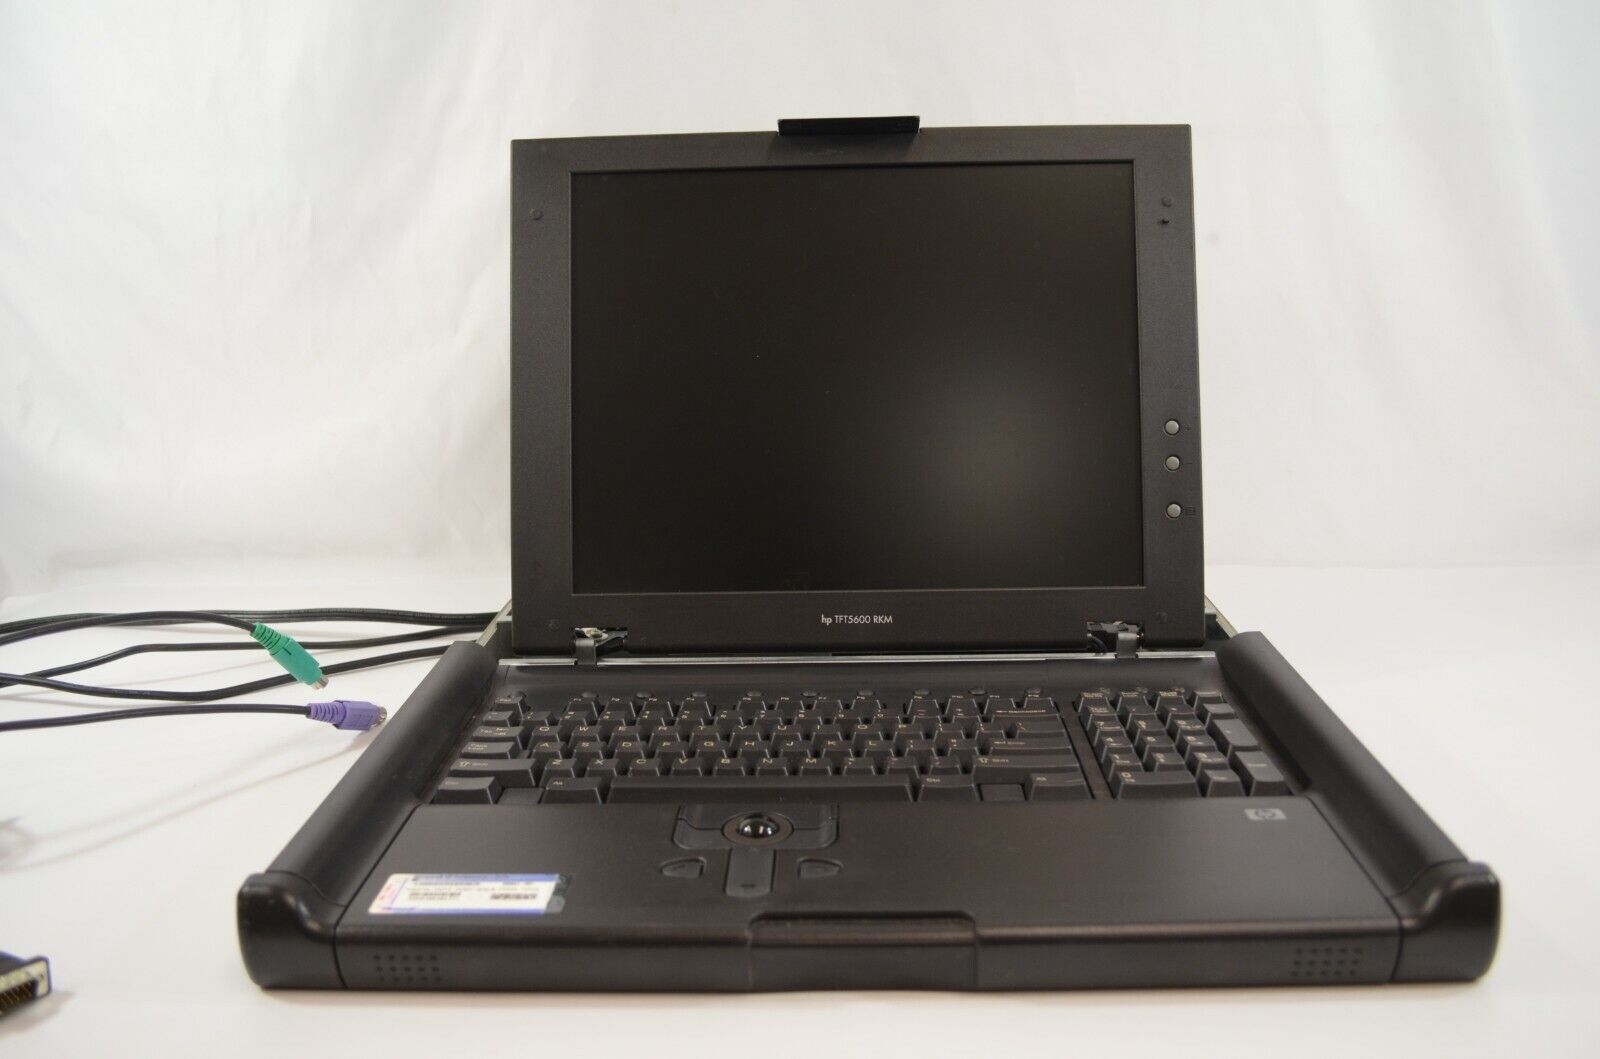 HP TFT5600 RKM Rackmount LCD Monitor Keyboard Mouse USB No Rails NEEDS REPAIR